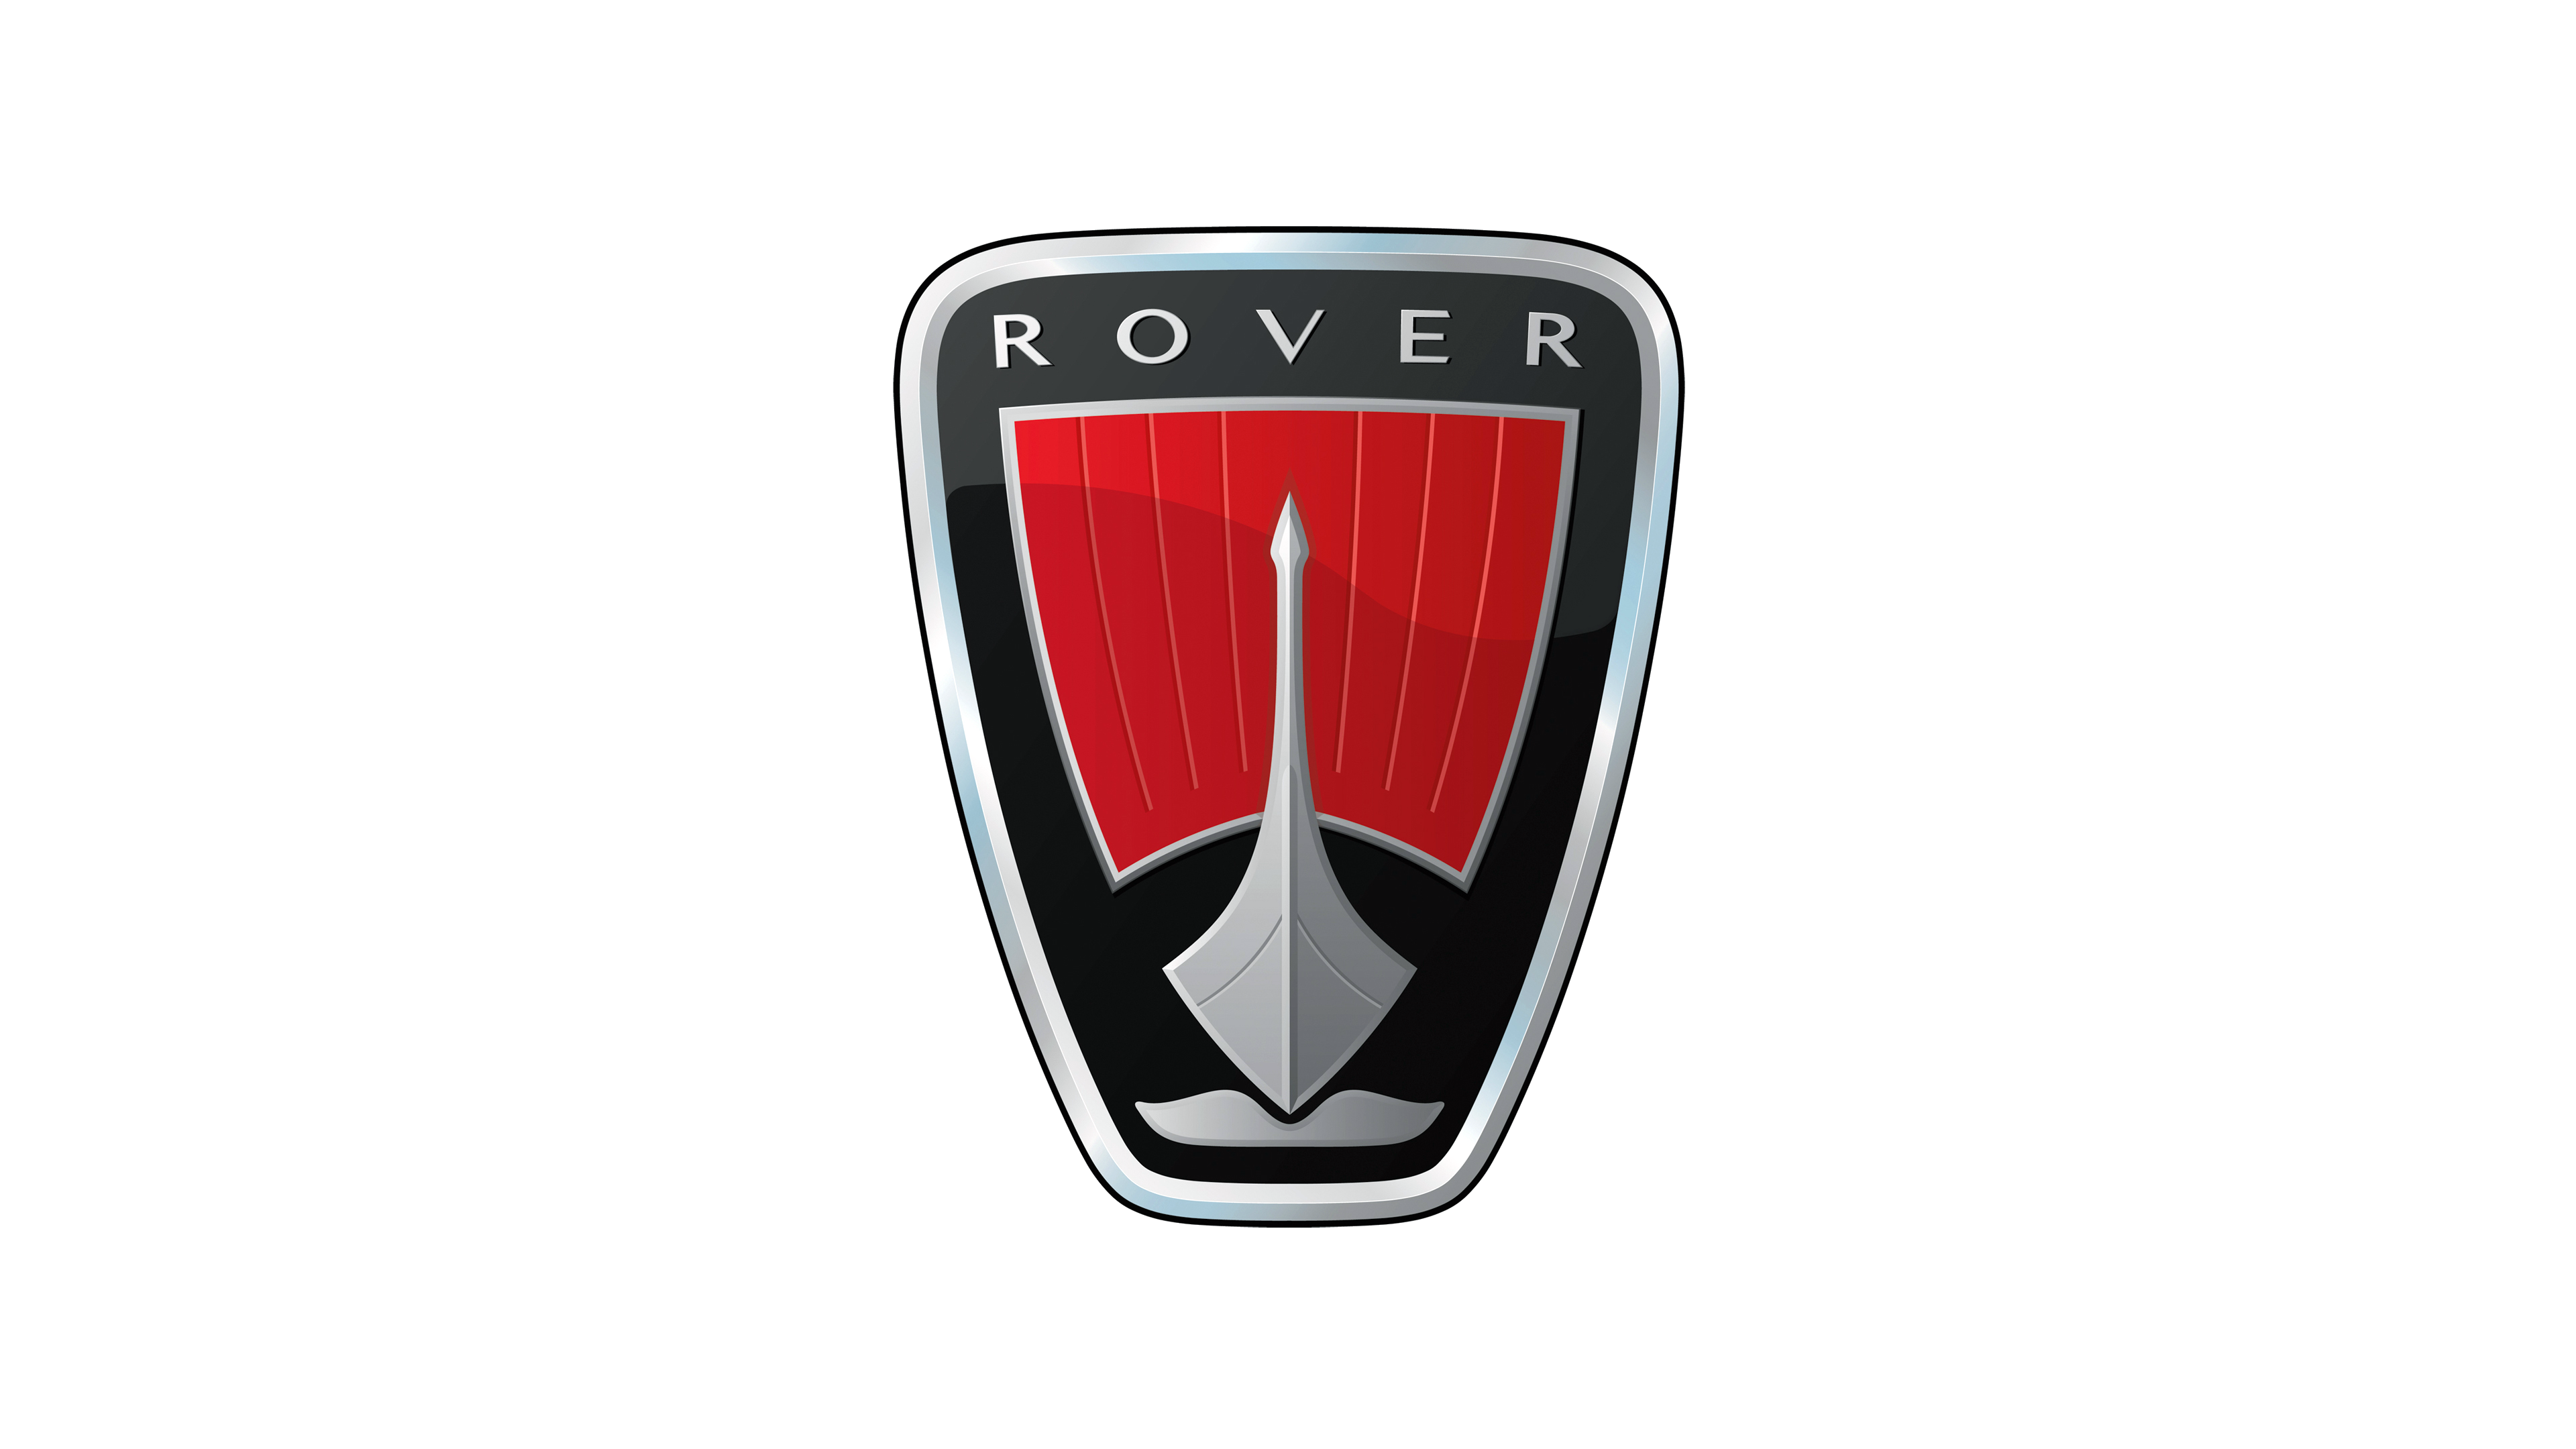 White Range Rover Car PNG Ima